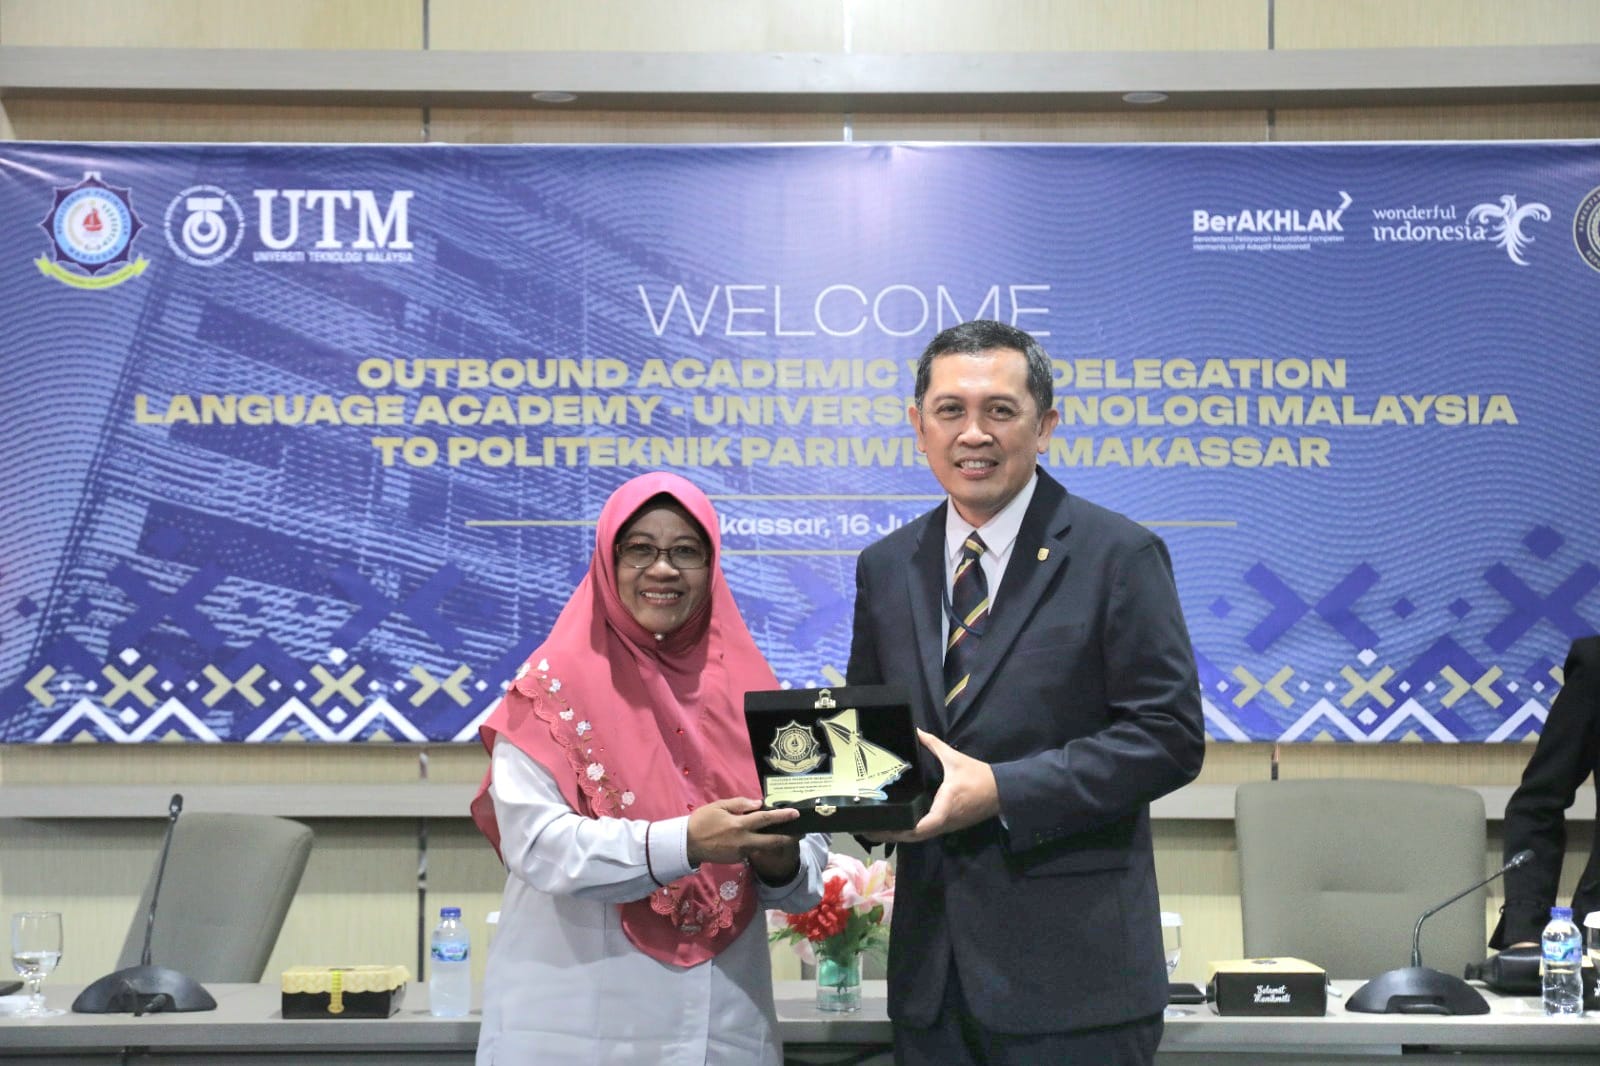 Kunjungan Dosen dan mahasiswa Language Academy Universiti Teknologi Malaysia (UTM)